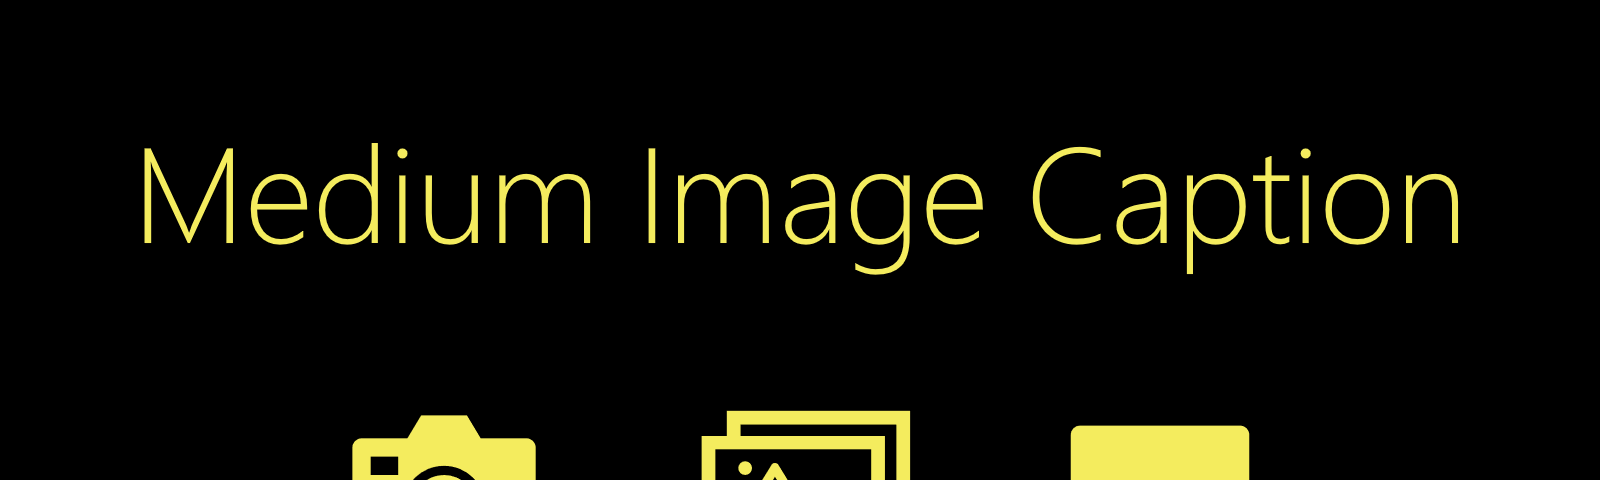 medium image caption, how to add caption to medium image, medium preview image size, medium caption, medium image blogging